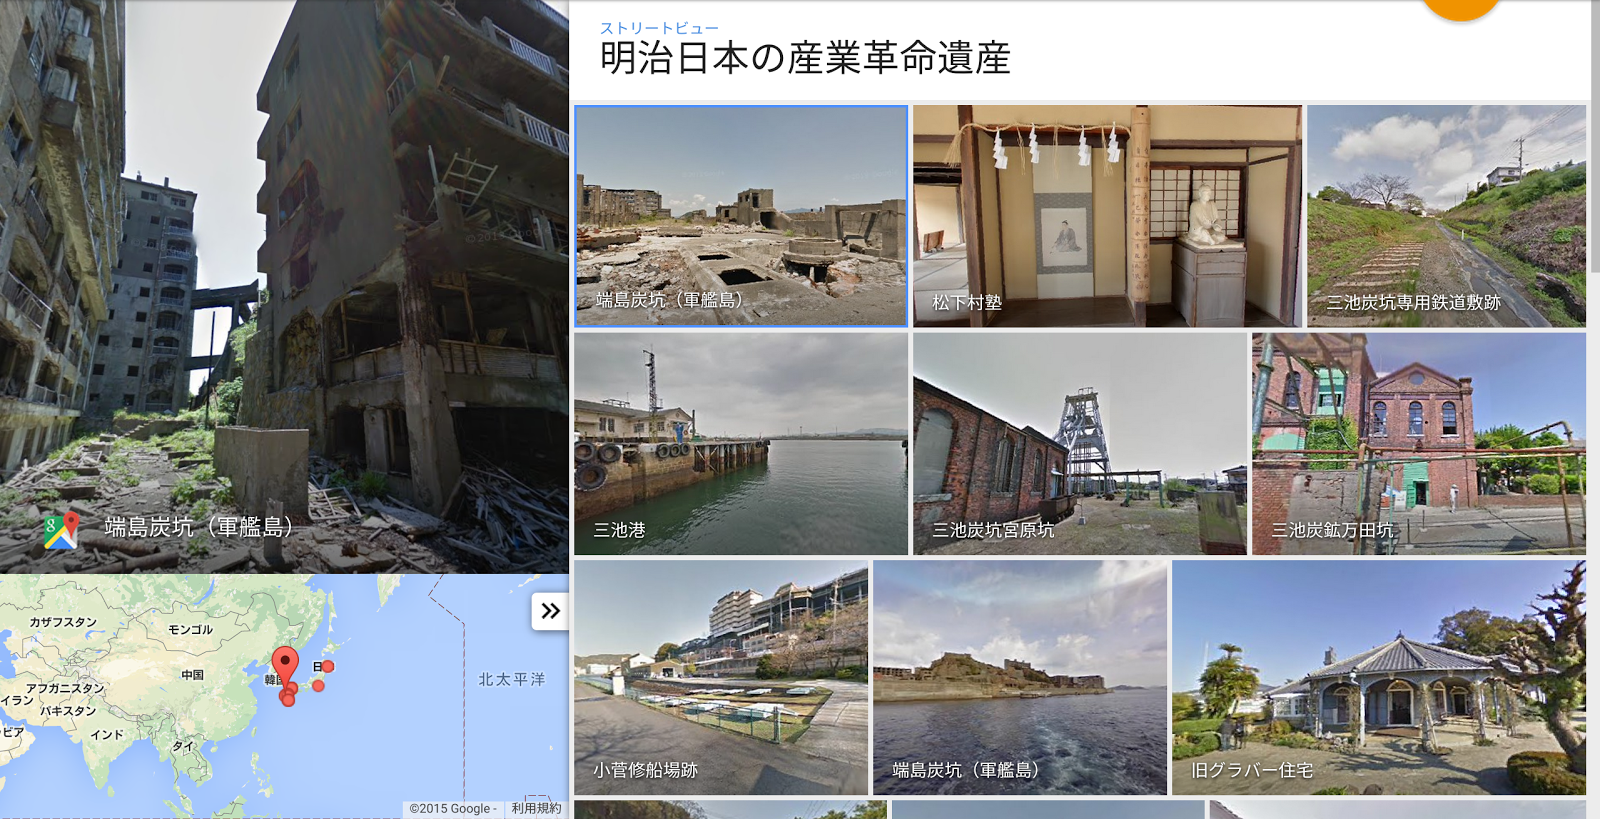 Google Japan Blog: 明治日本の産業革命遺産、ストリートビューに登場